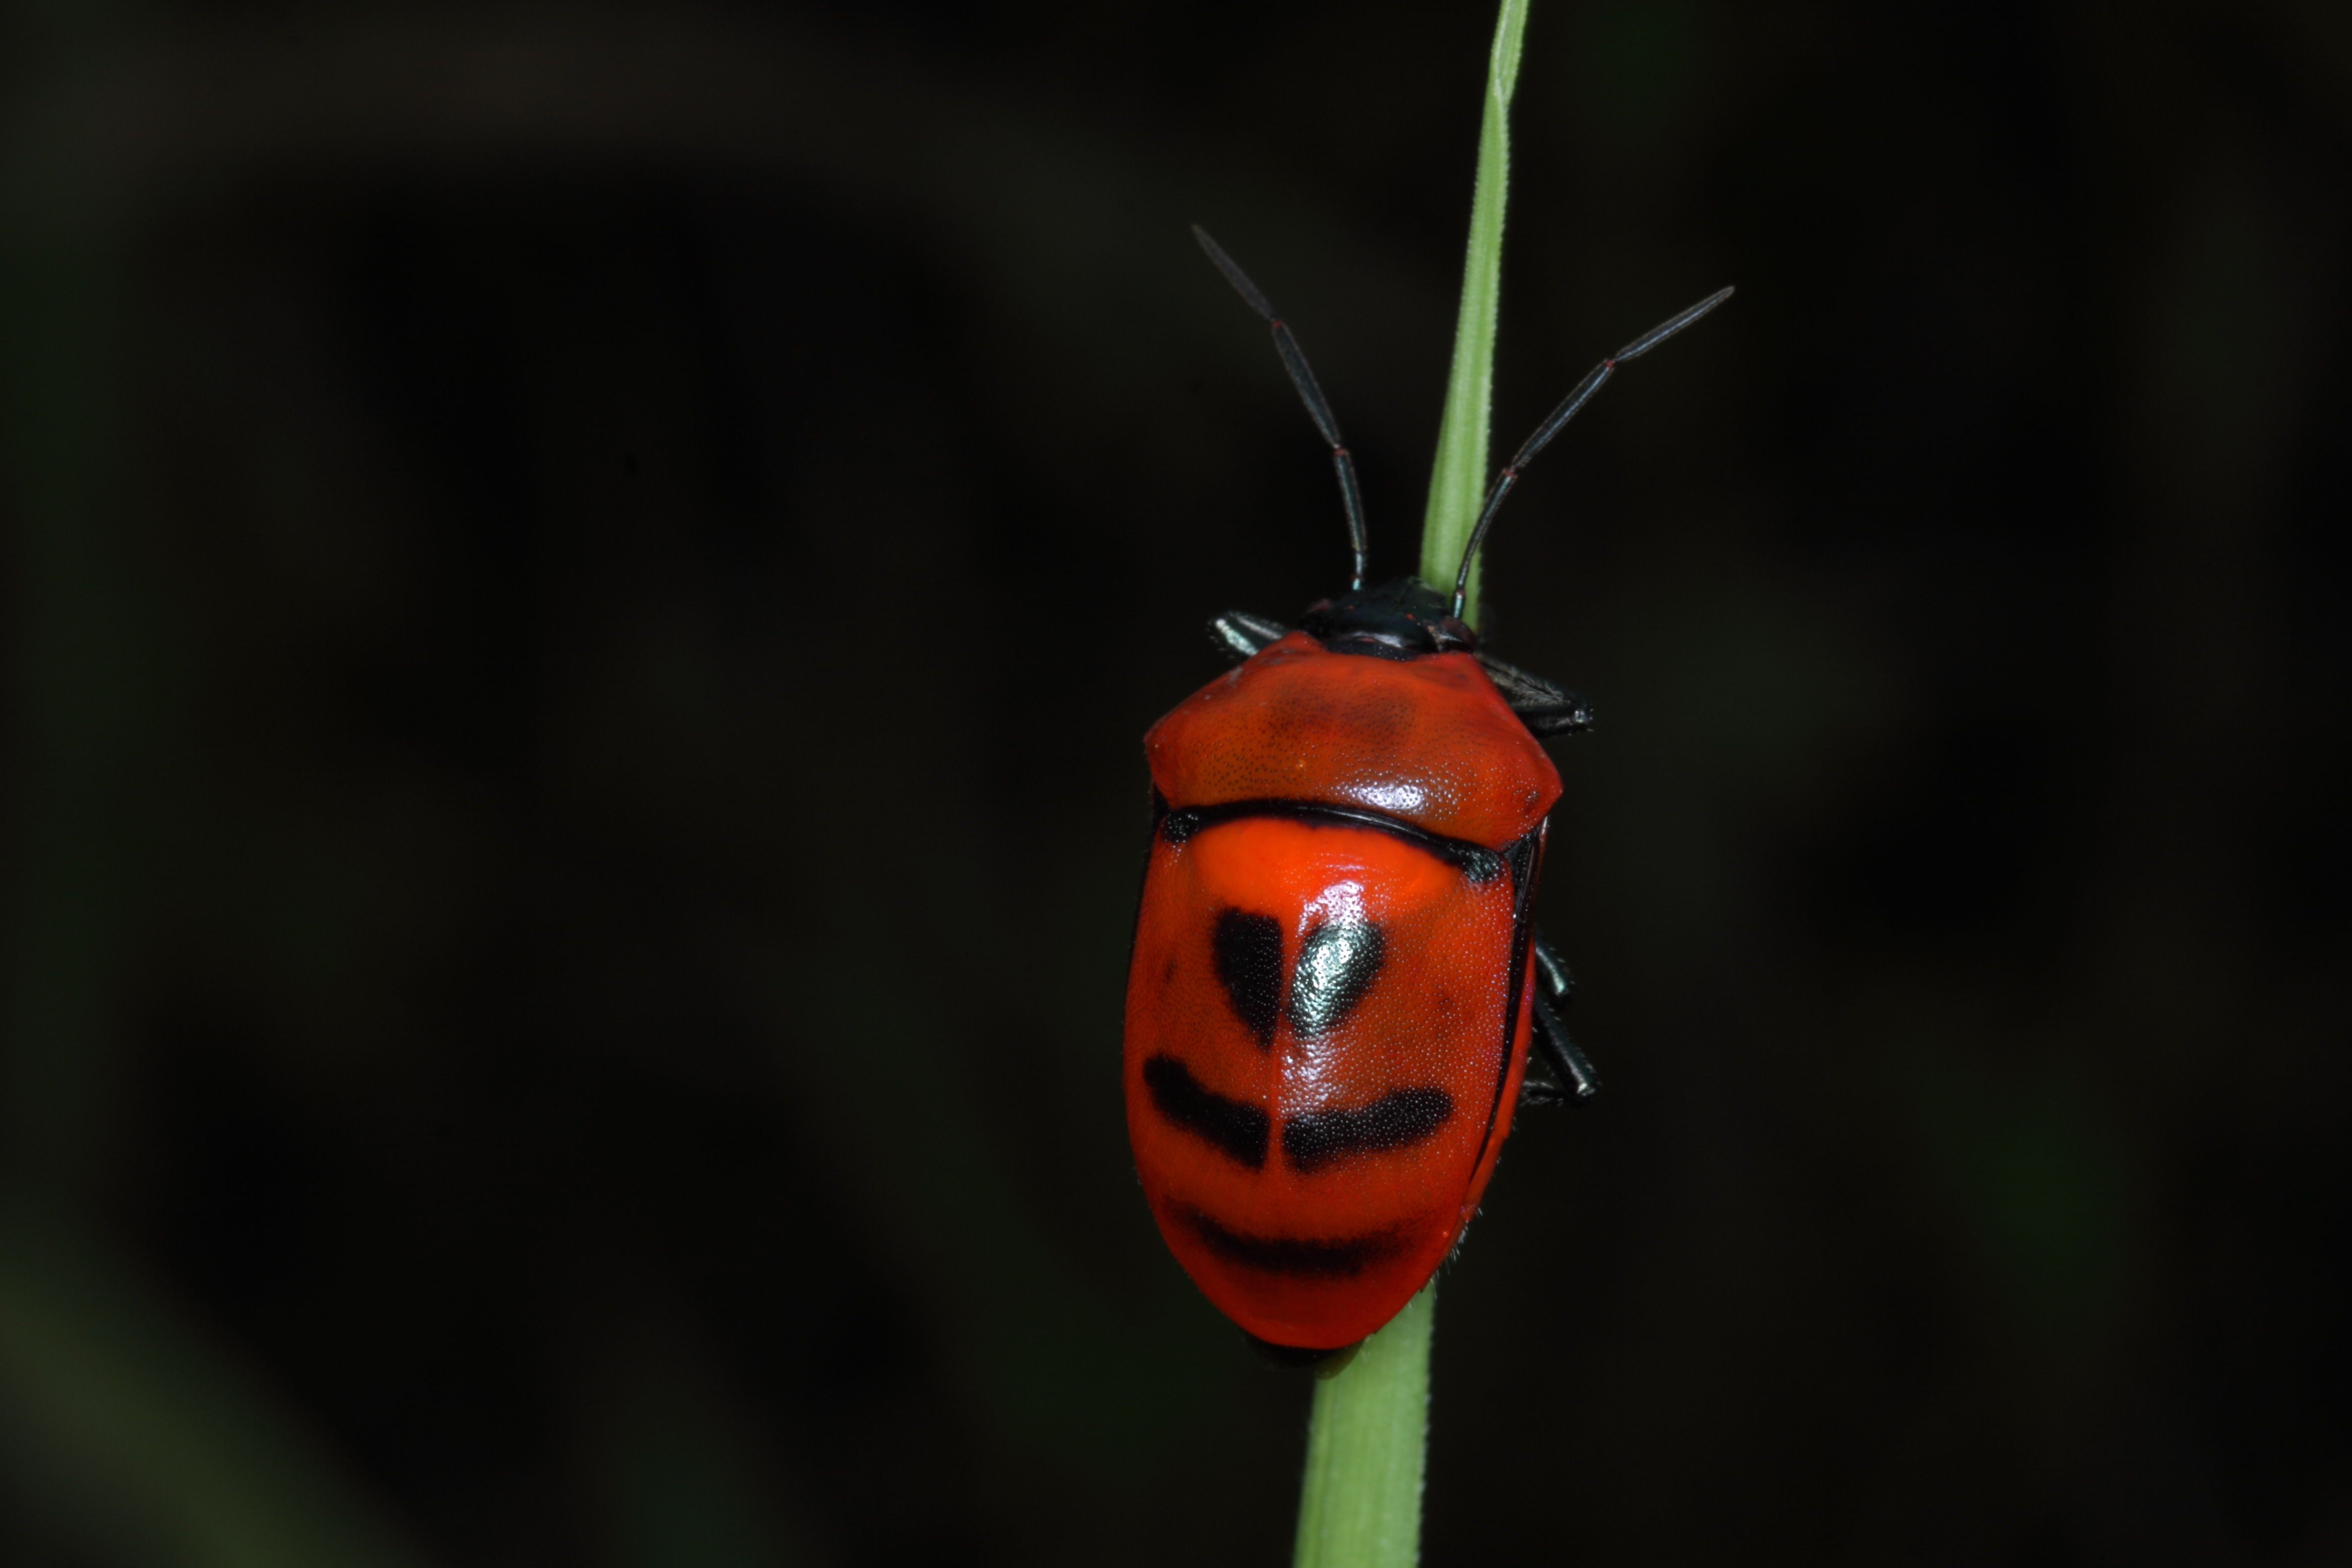 Iron cross blister beetle